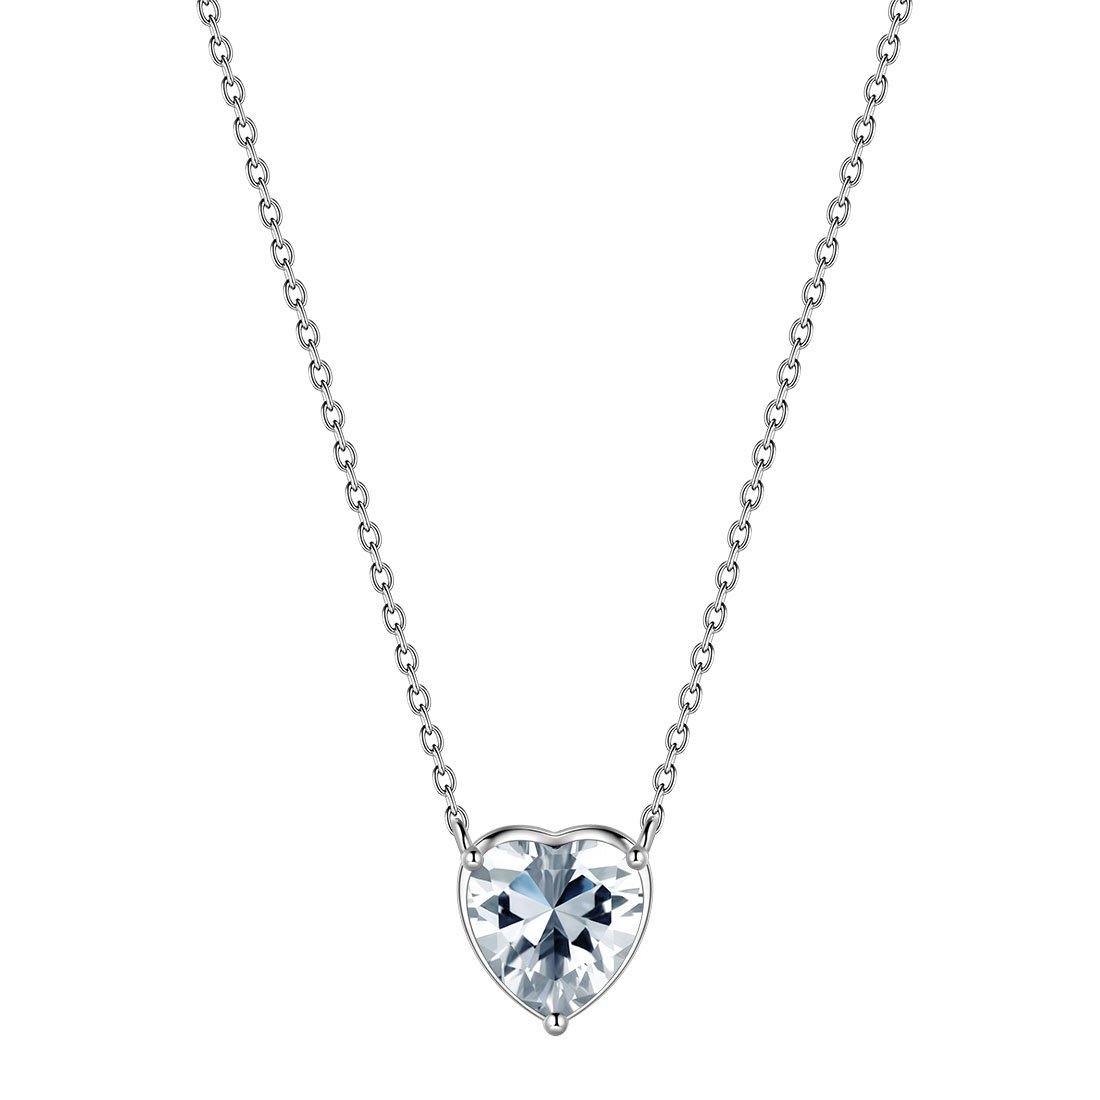 Birthstone Pendant Hearts Necklaces Sterling Silver April-Diamond Aurora Tears Jewelry